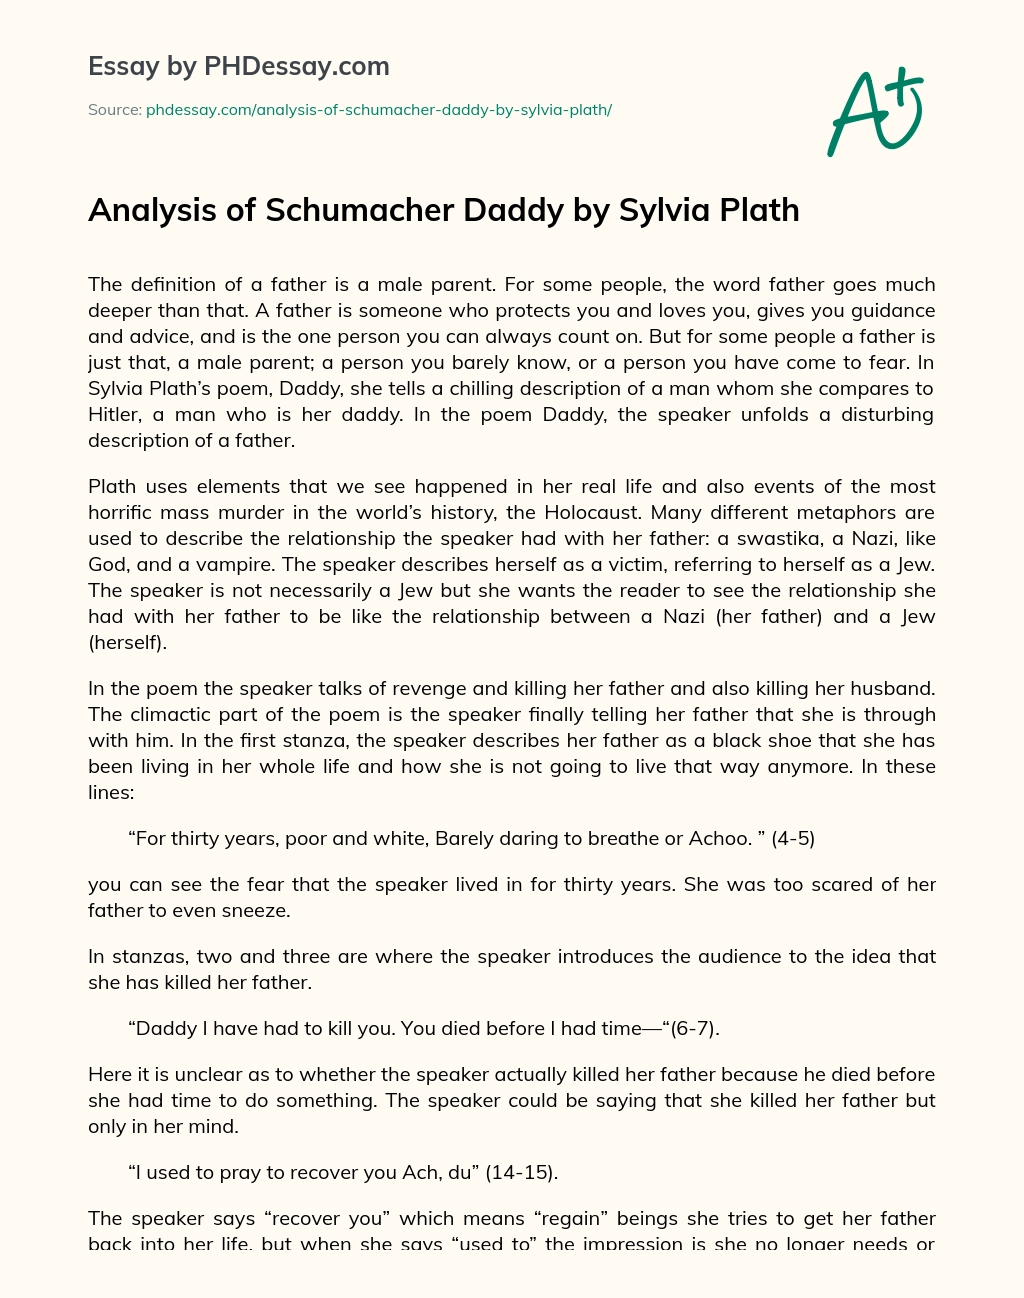 Analysis of Schumacher Daddy by Sylvia Plath essay